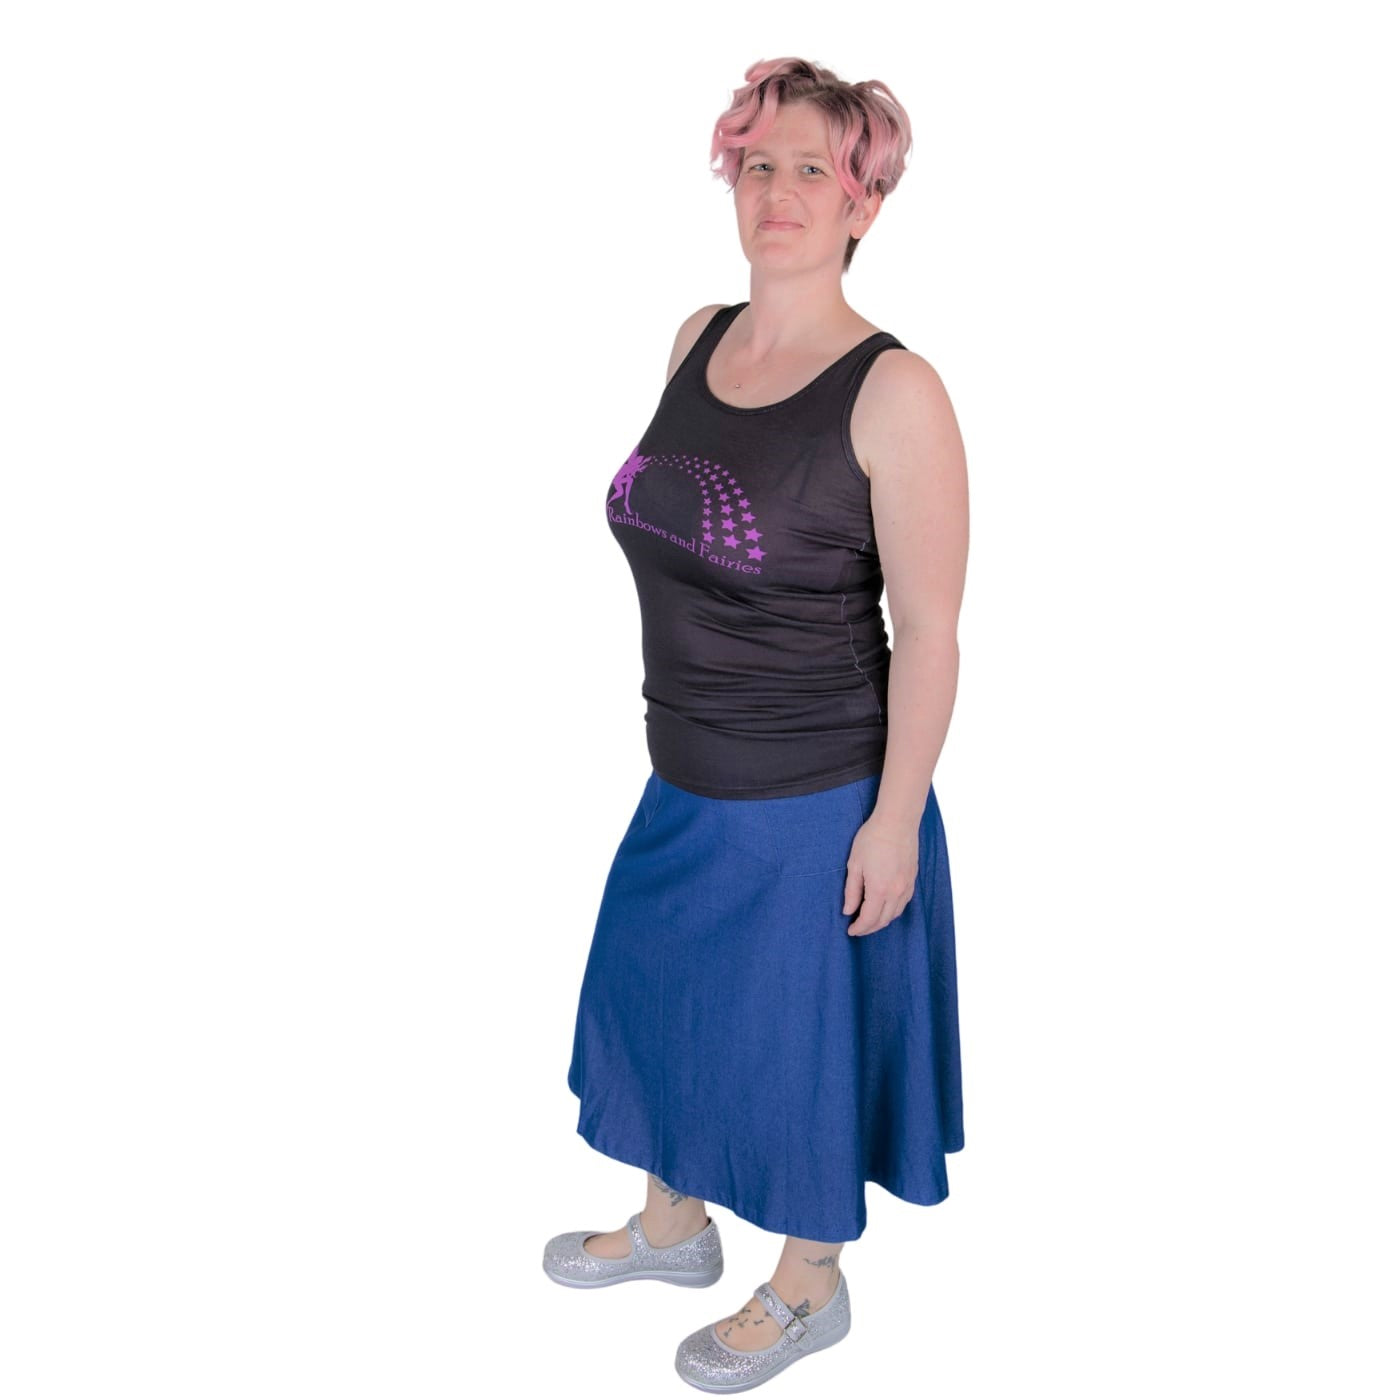 Blue Denim Original Skirt by RainbowsAndFairies.com.au (Denim Skirt - Jean - Skirt With Pockets - Aline - Vintage Inspired - Kitsch) - SKU: CL_OSKRT_DENIM_BLU - Pic-04